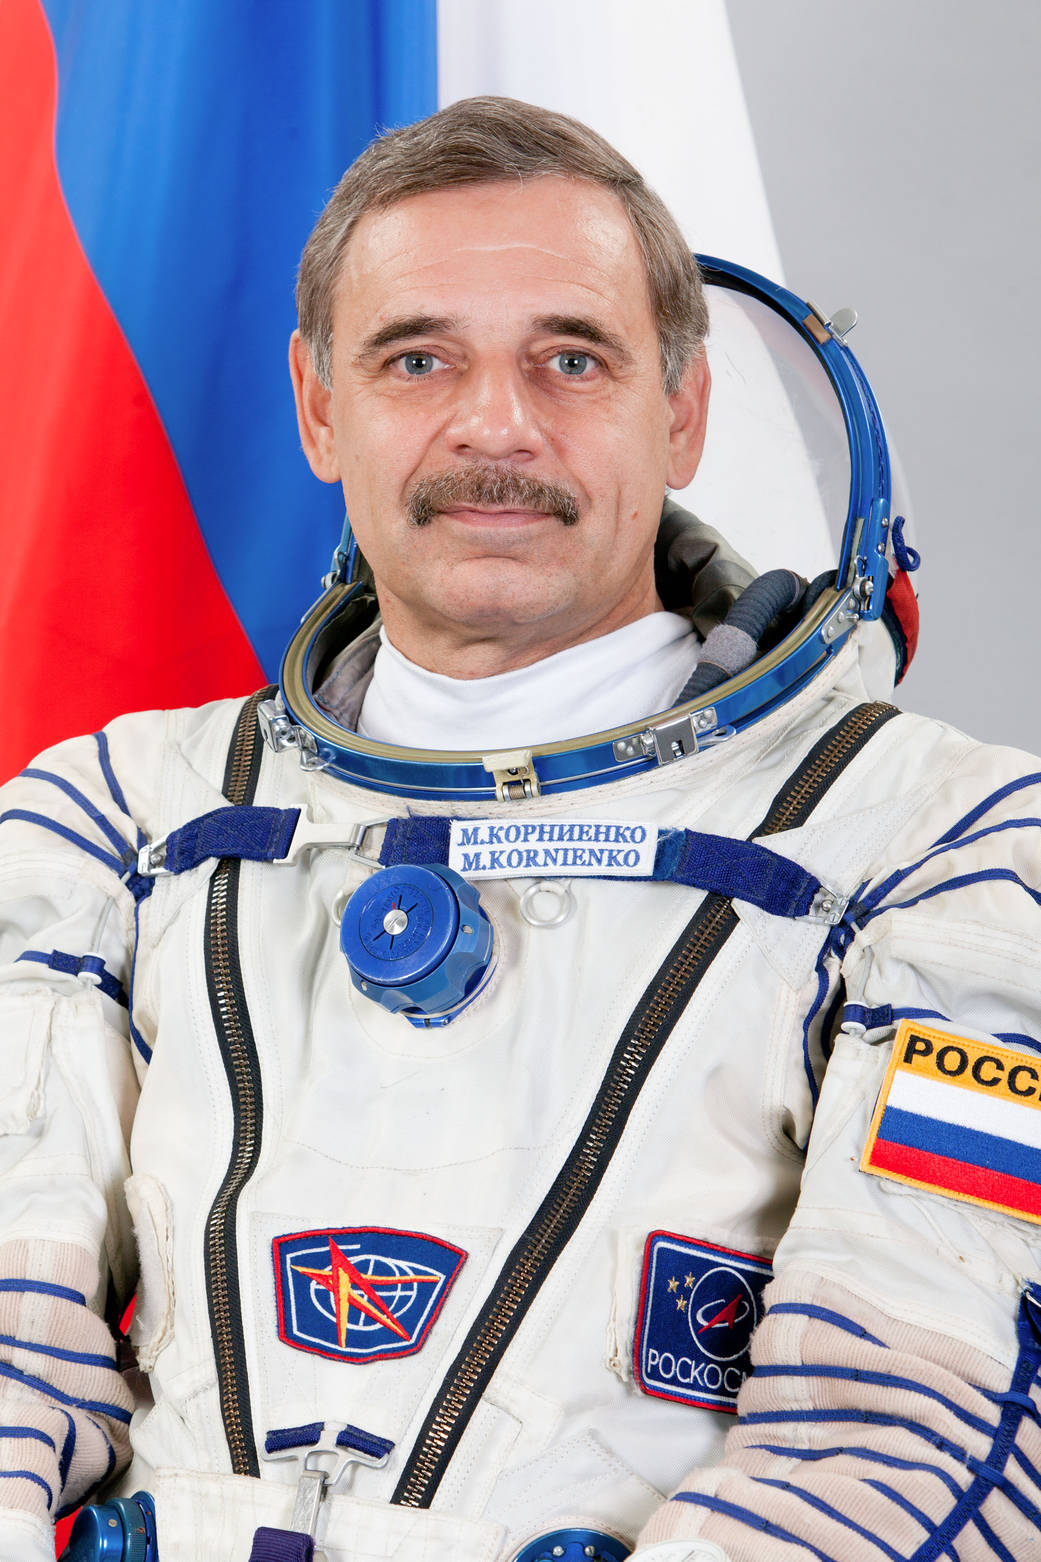 cosmonauta Mikhail Kornienko